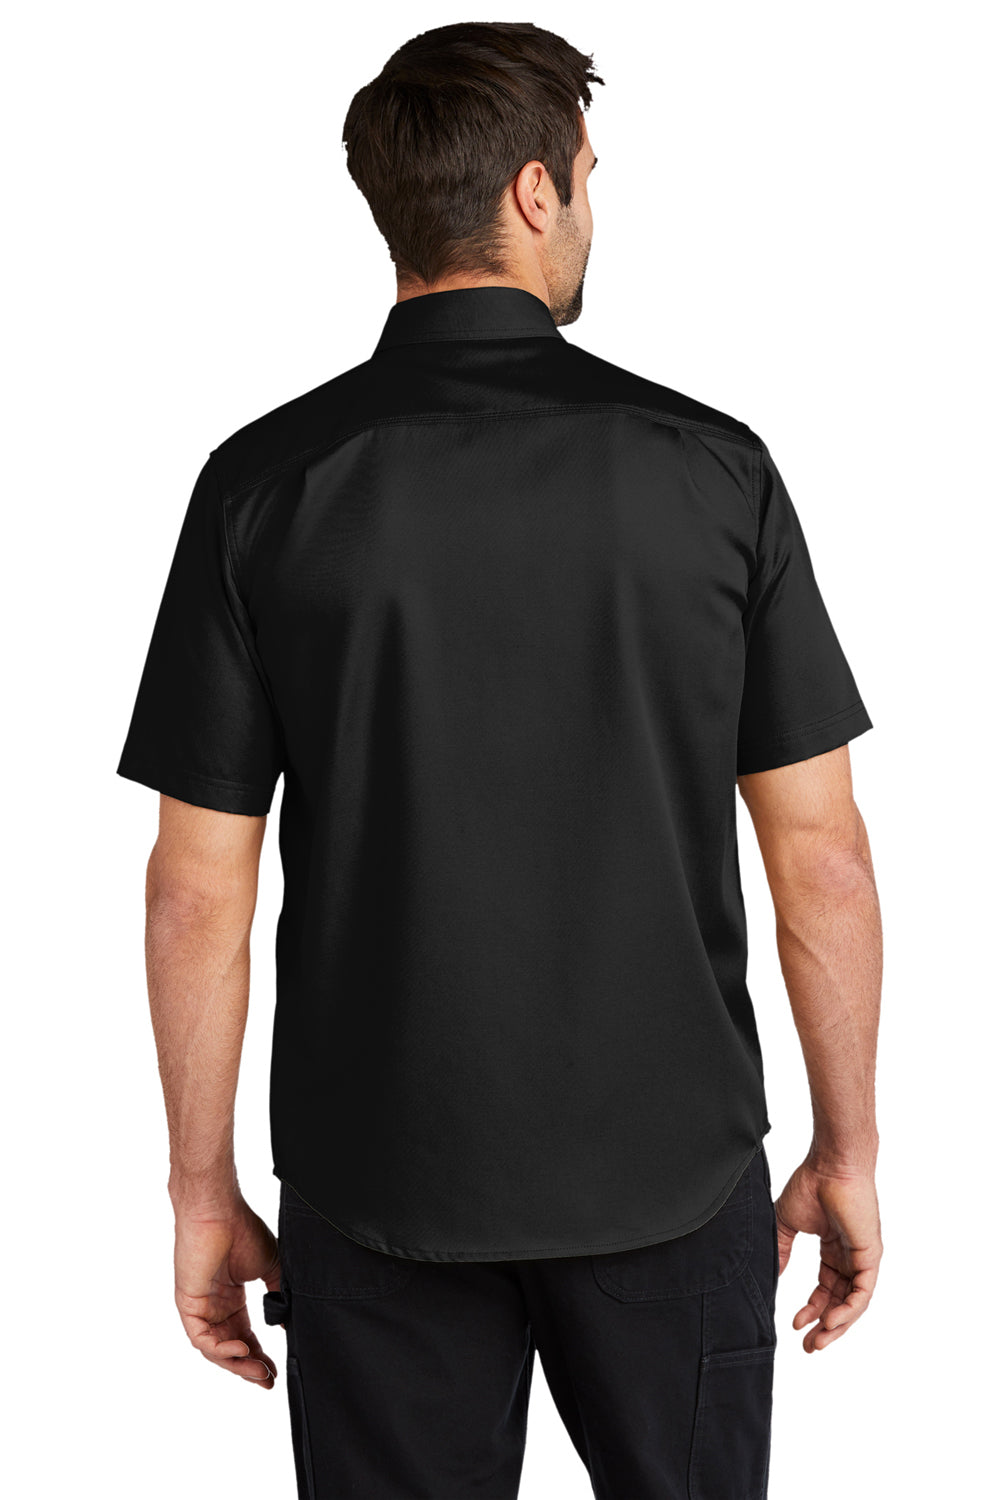 Carhartt CT102537 Mens Rugged Professional Series Wrinkle Resistant Short Sleeve Button Down Shirt w/ Pocket Black Model Back